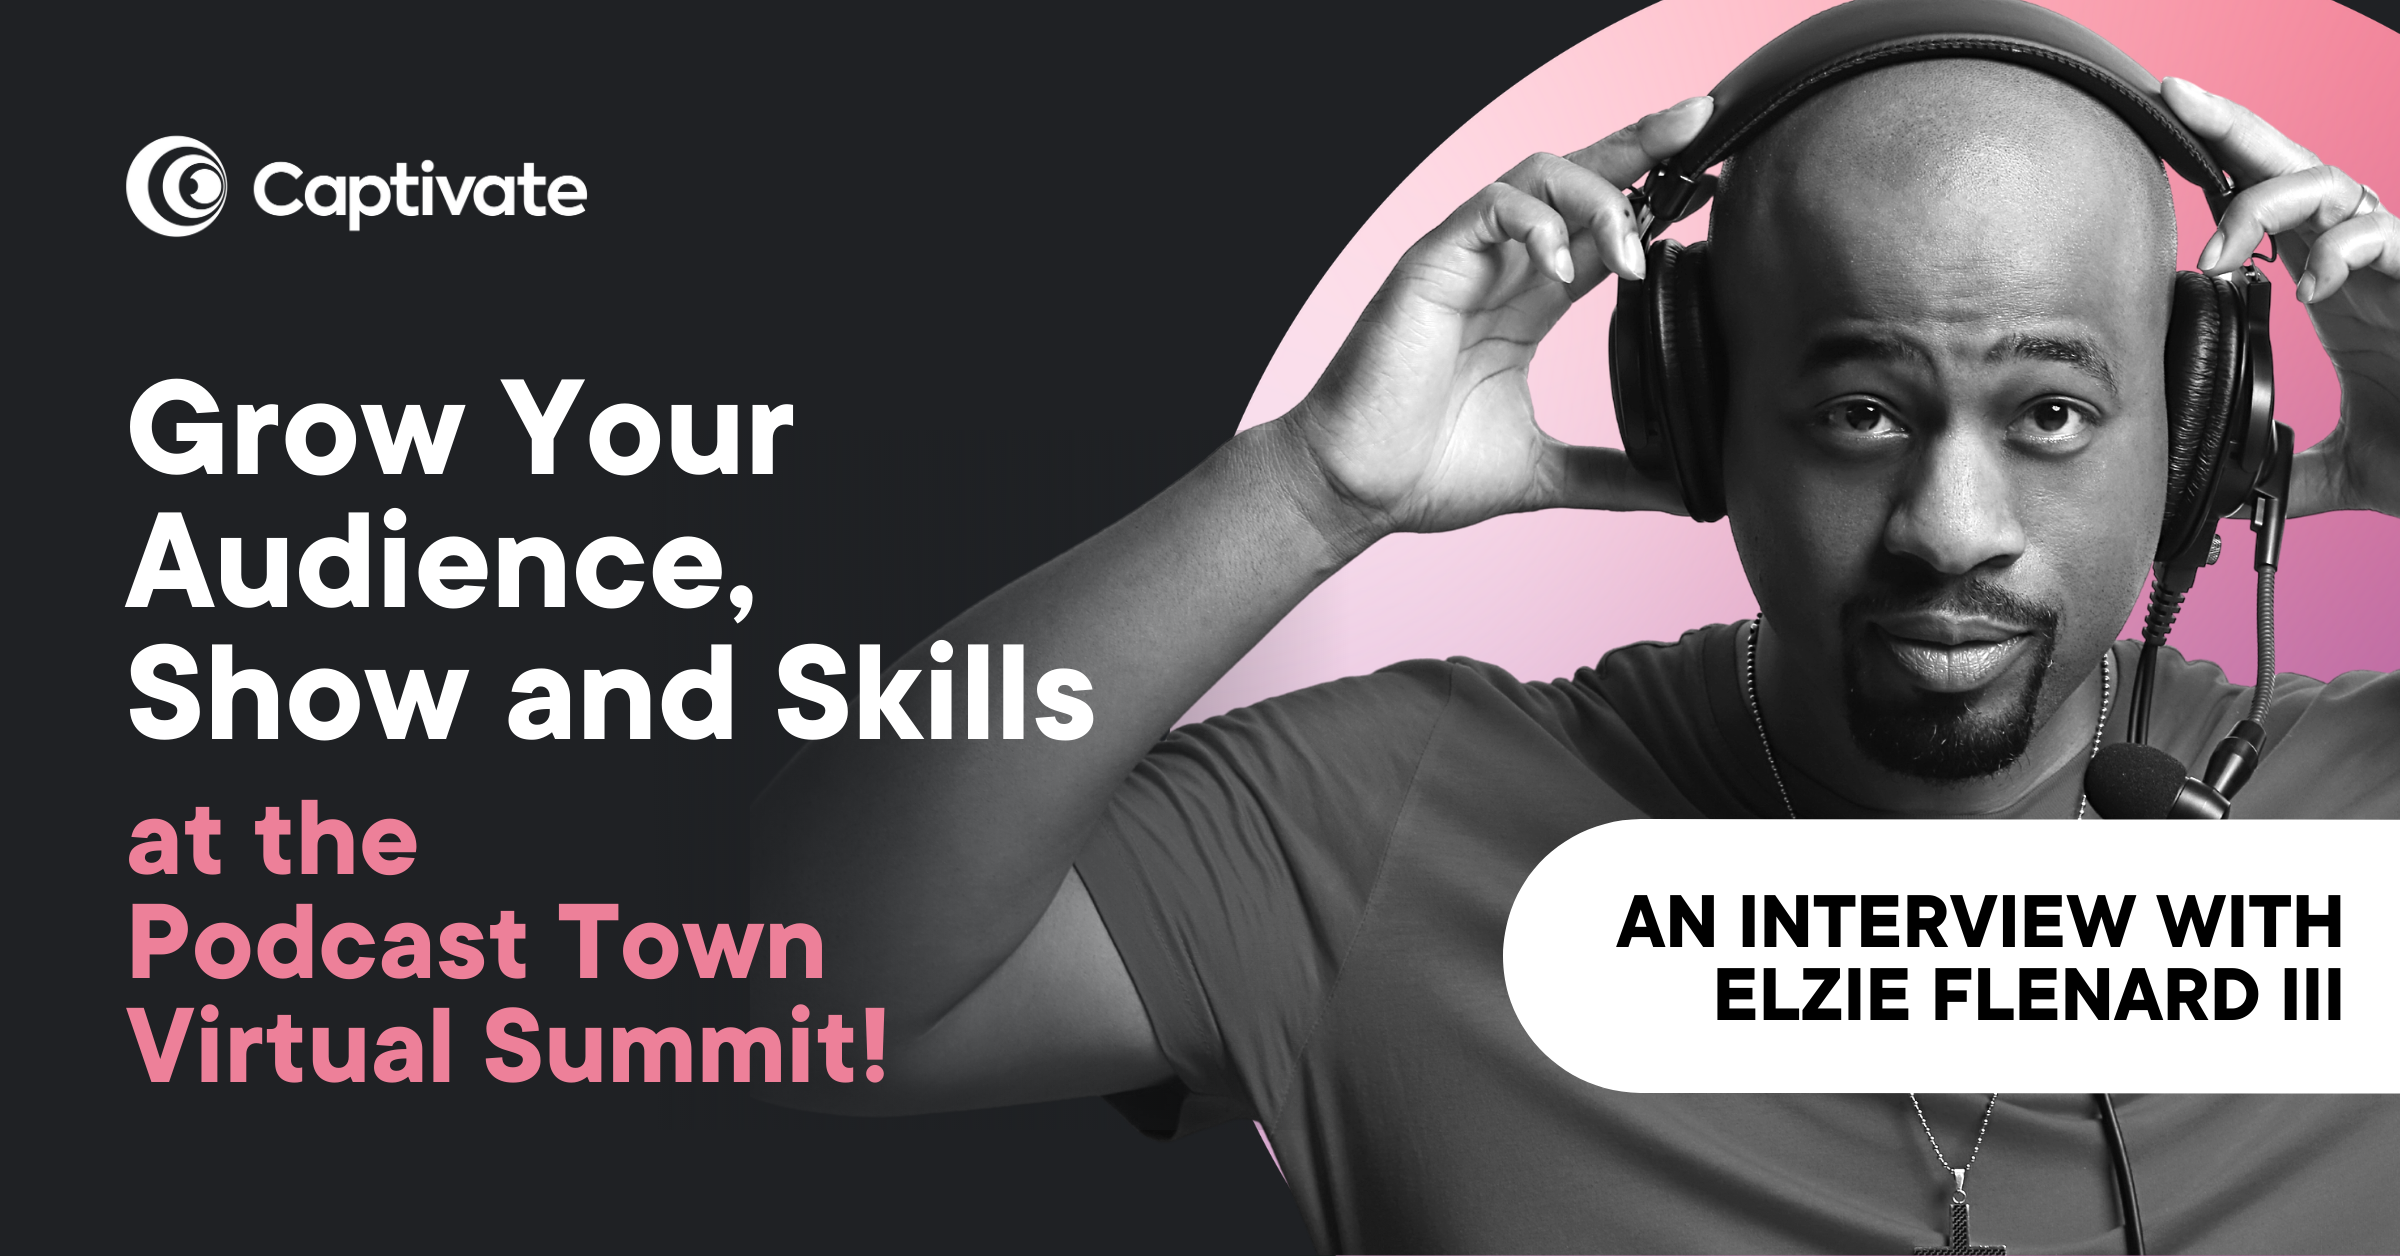 Elzie Flenard III - Podcast Town Virtual Summit